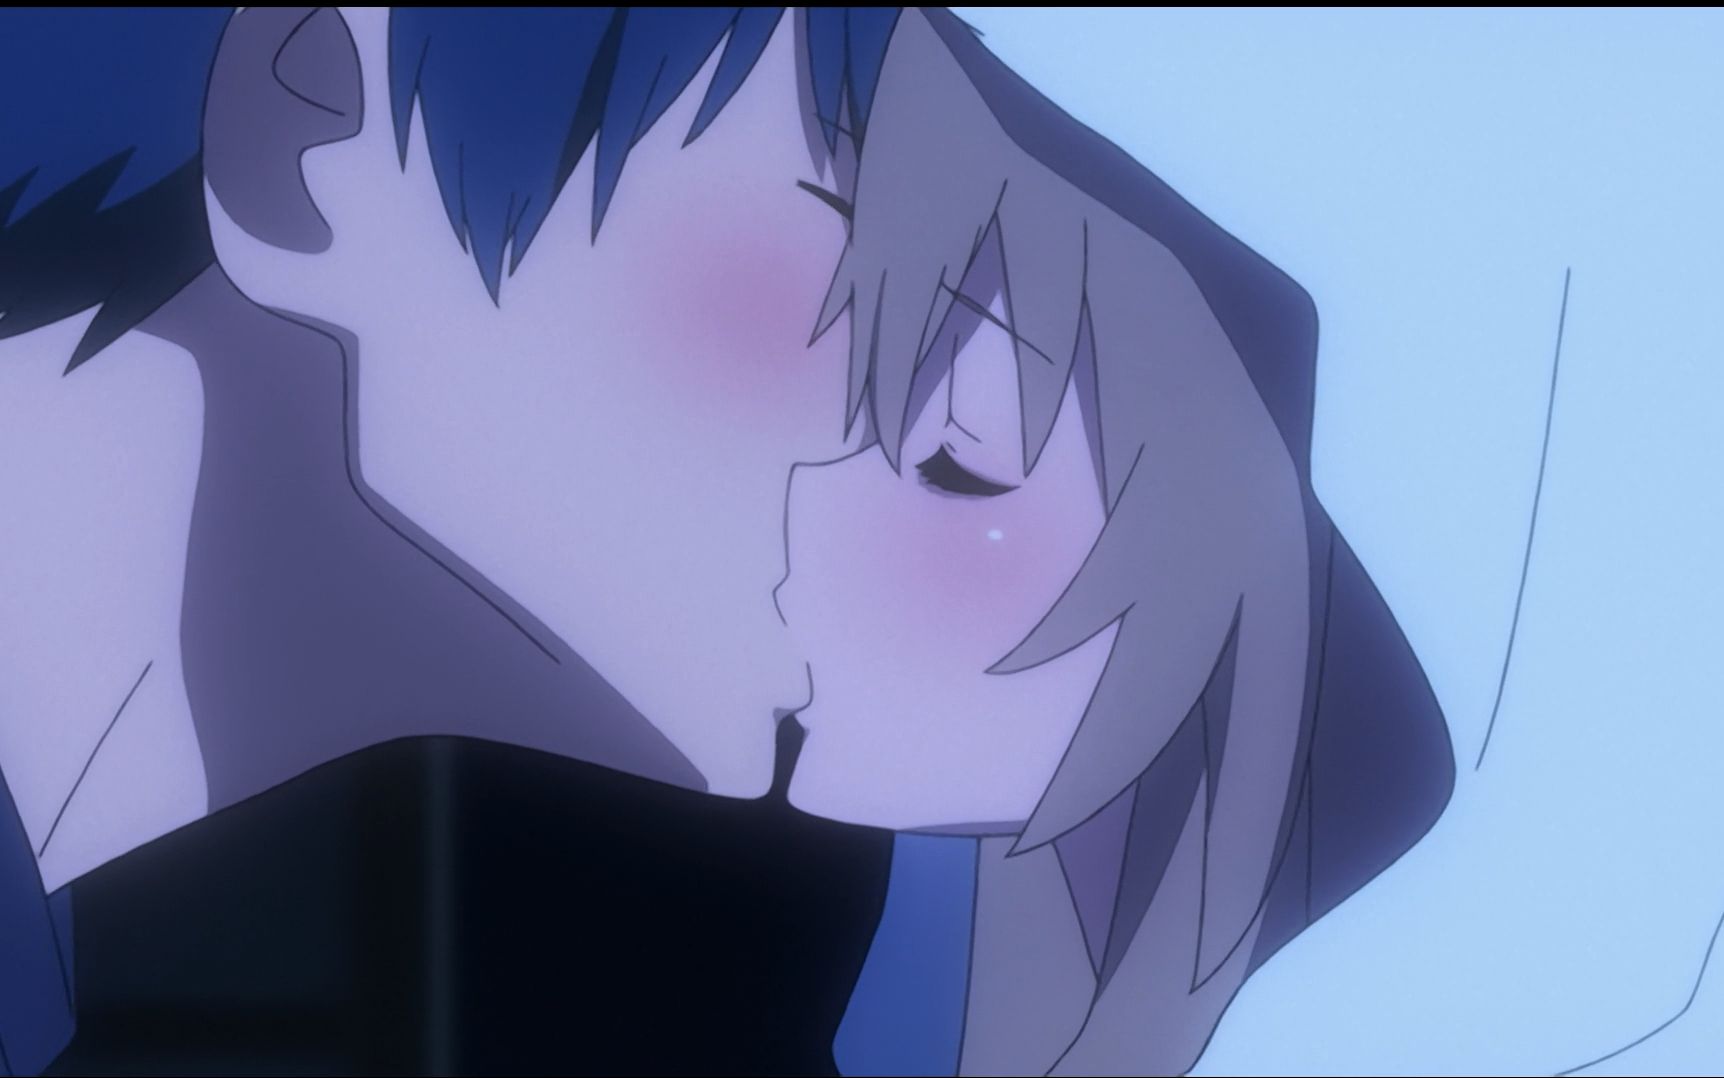 Mix] Sweet Anime Moments! Enjoy The Romance! - Bilibili